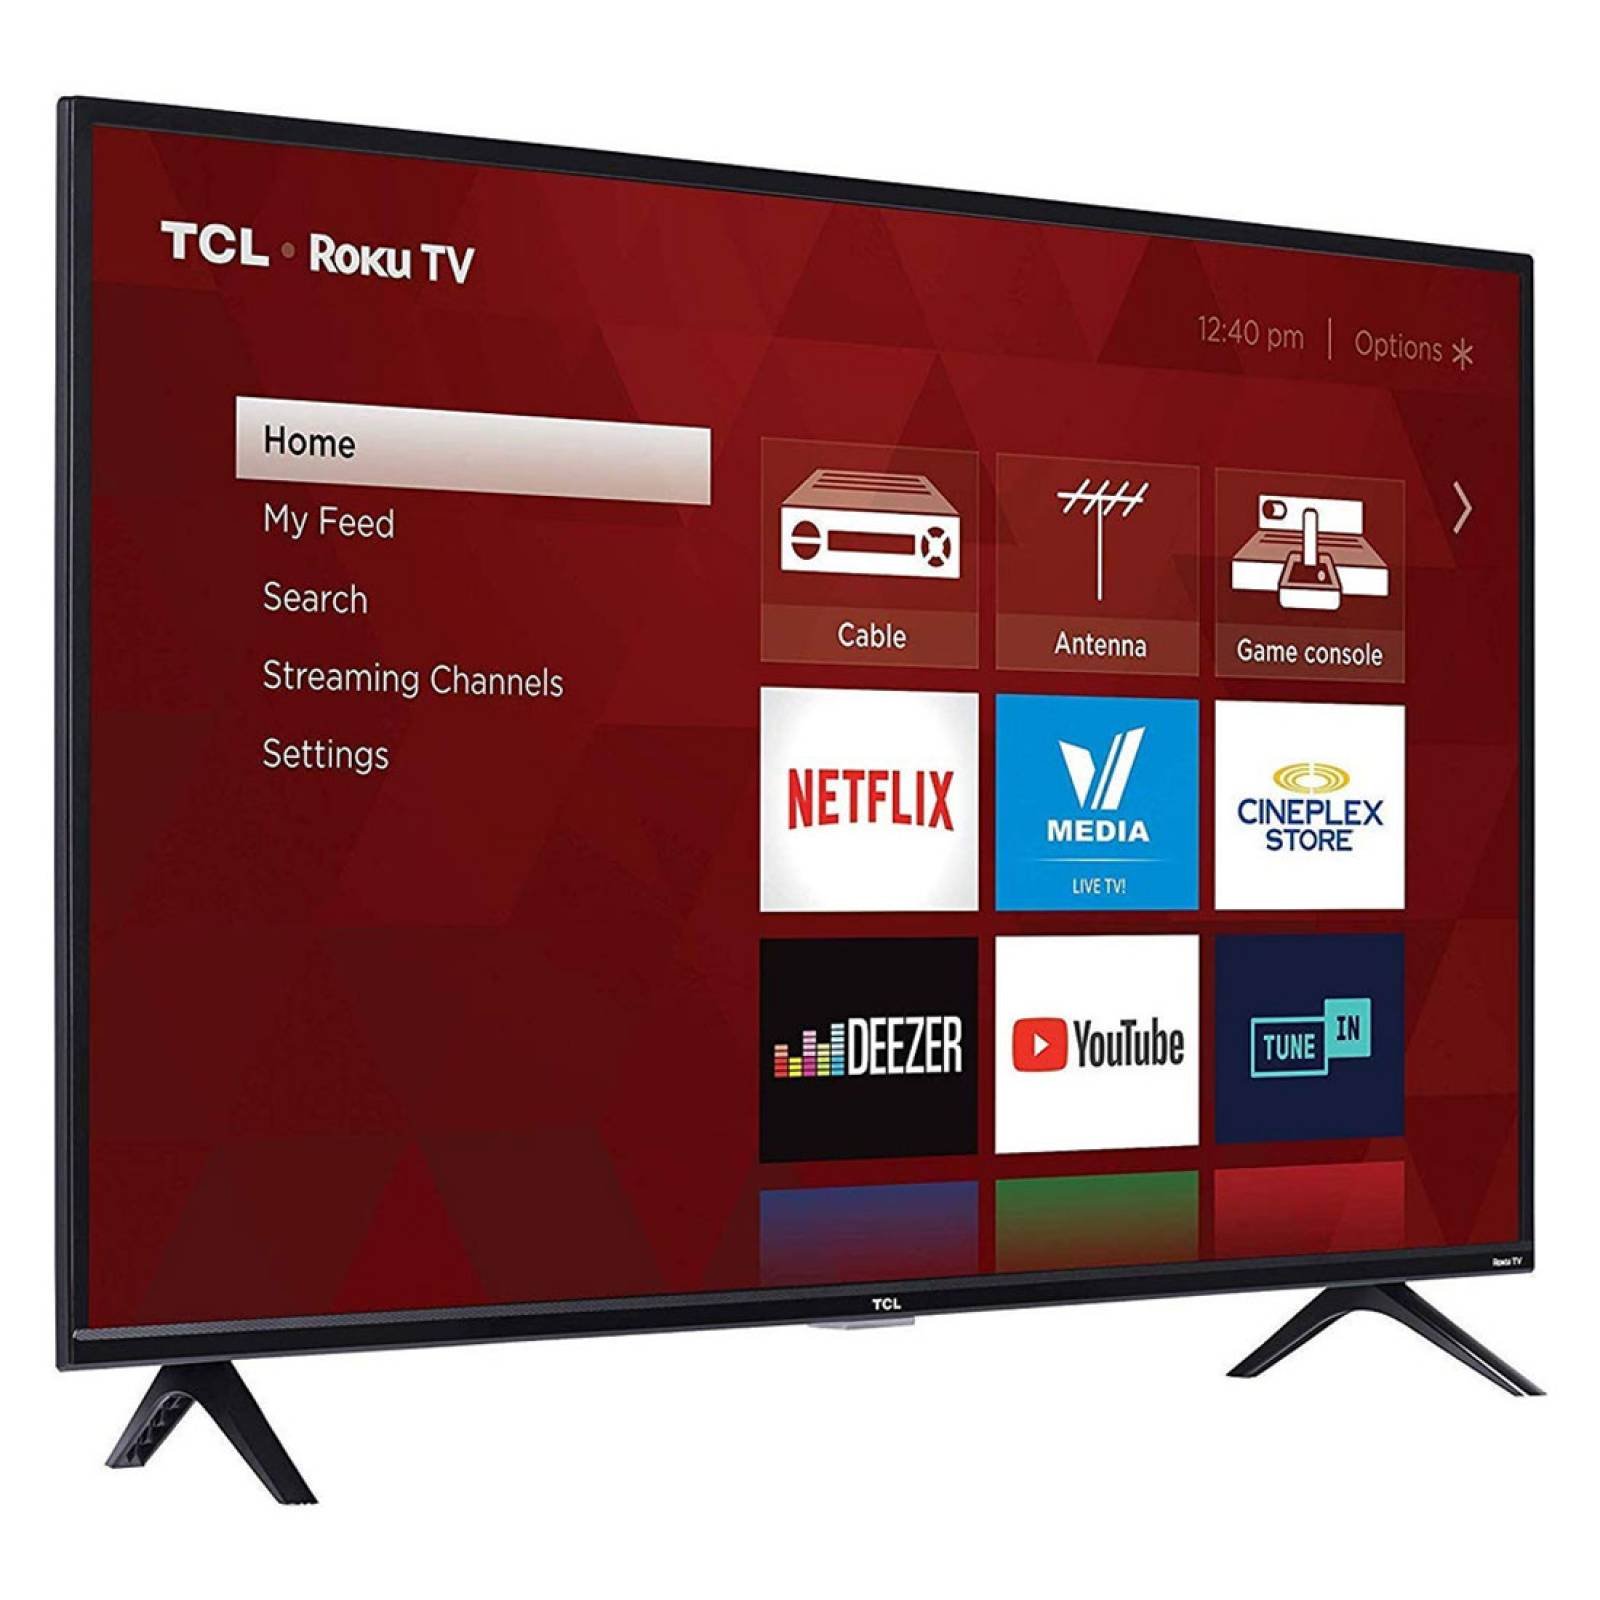 Smart TV 50 TCL LED 4K UHD Roku TV HDR Dolby 50S423 - Reacondicionado